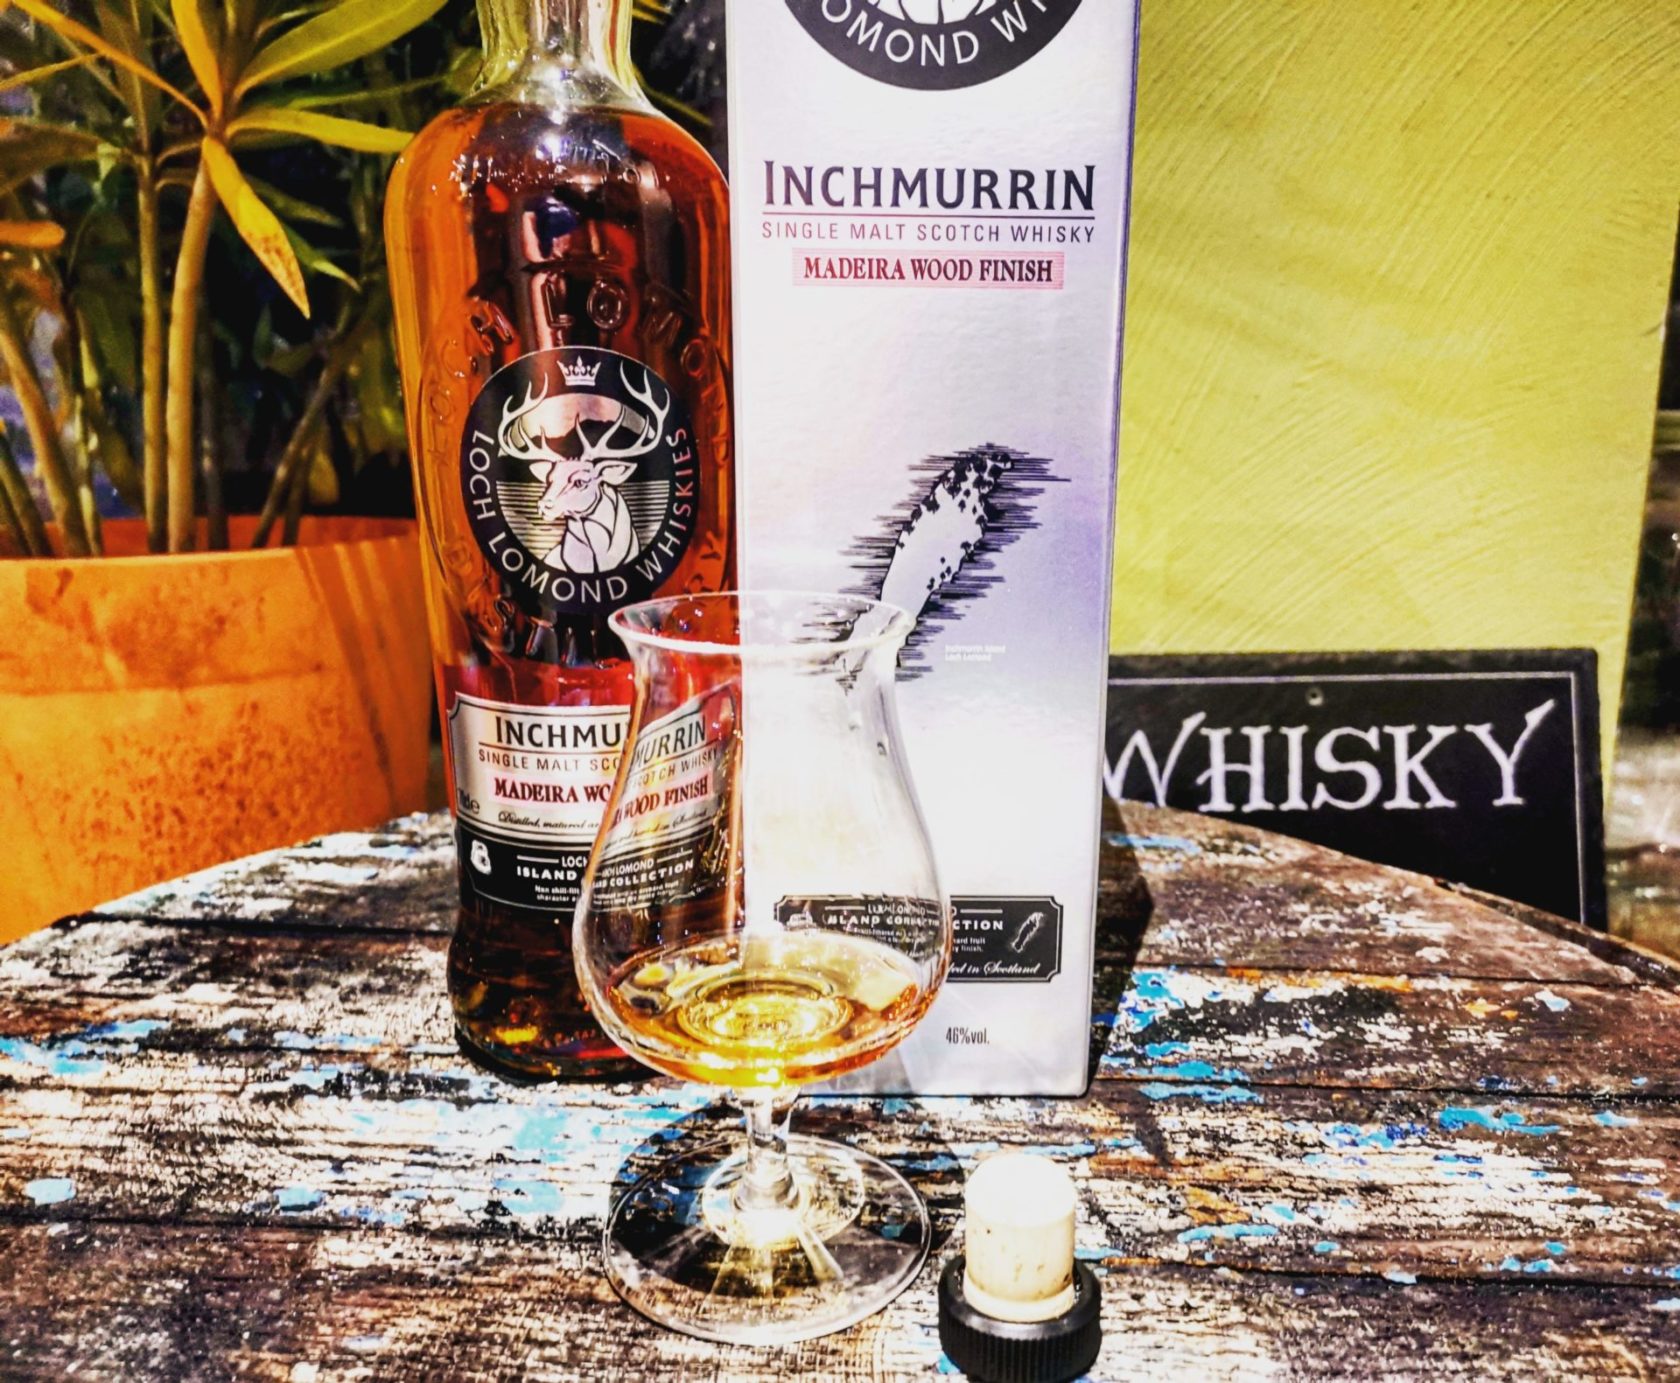 Inchmurrin Madeira Wood Finish Single Malt Scotch Whisky